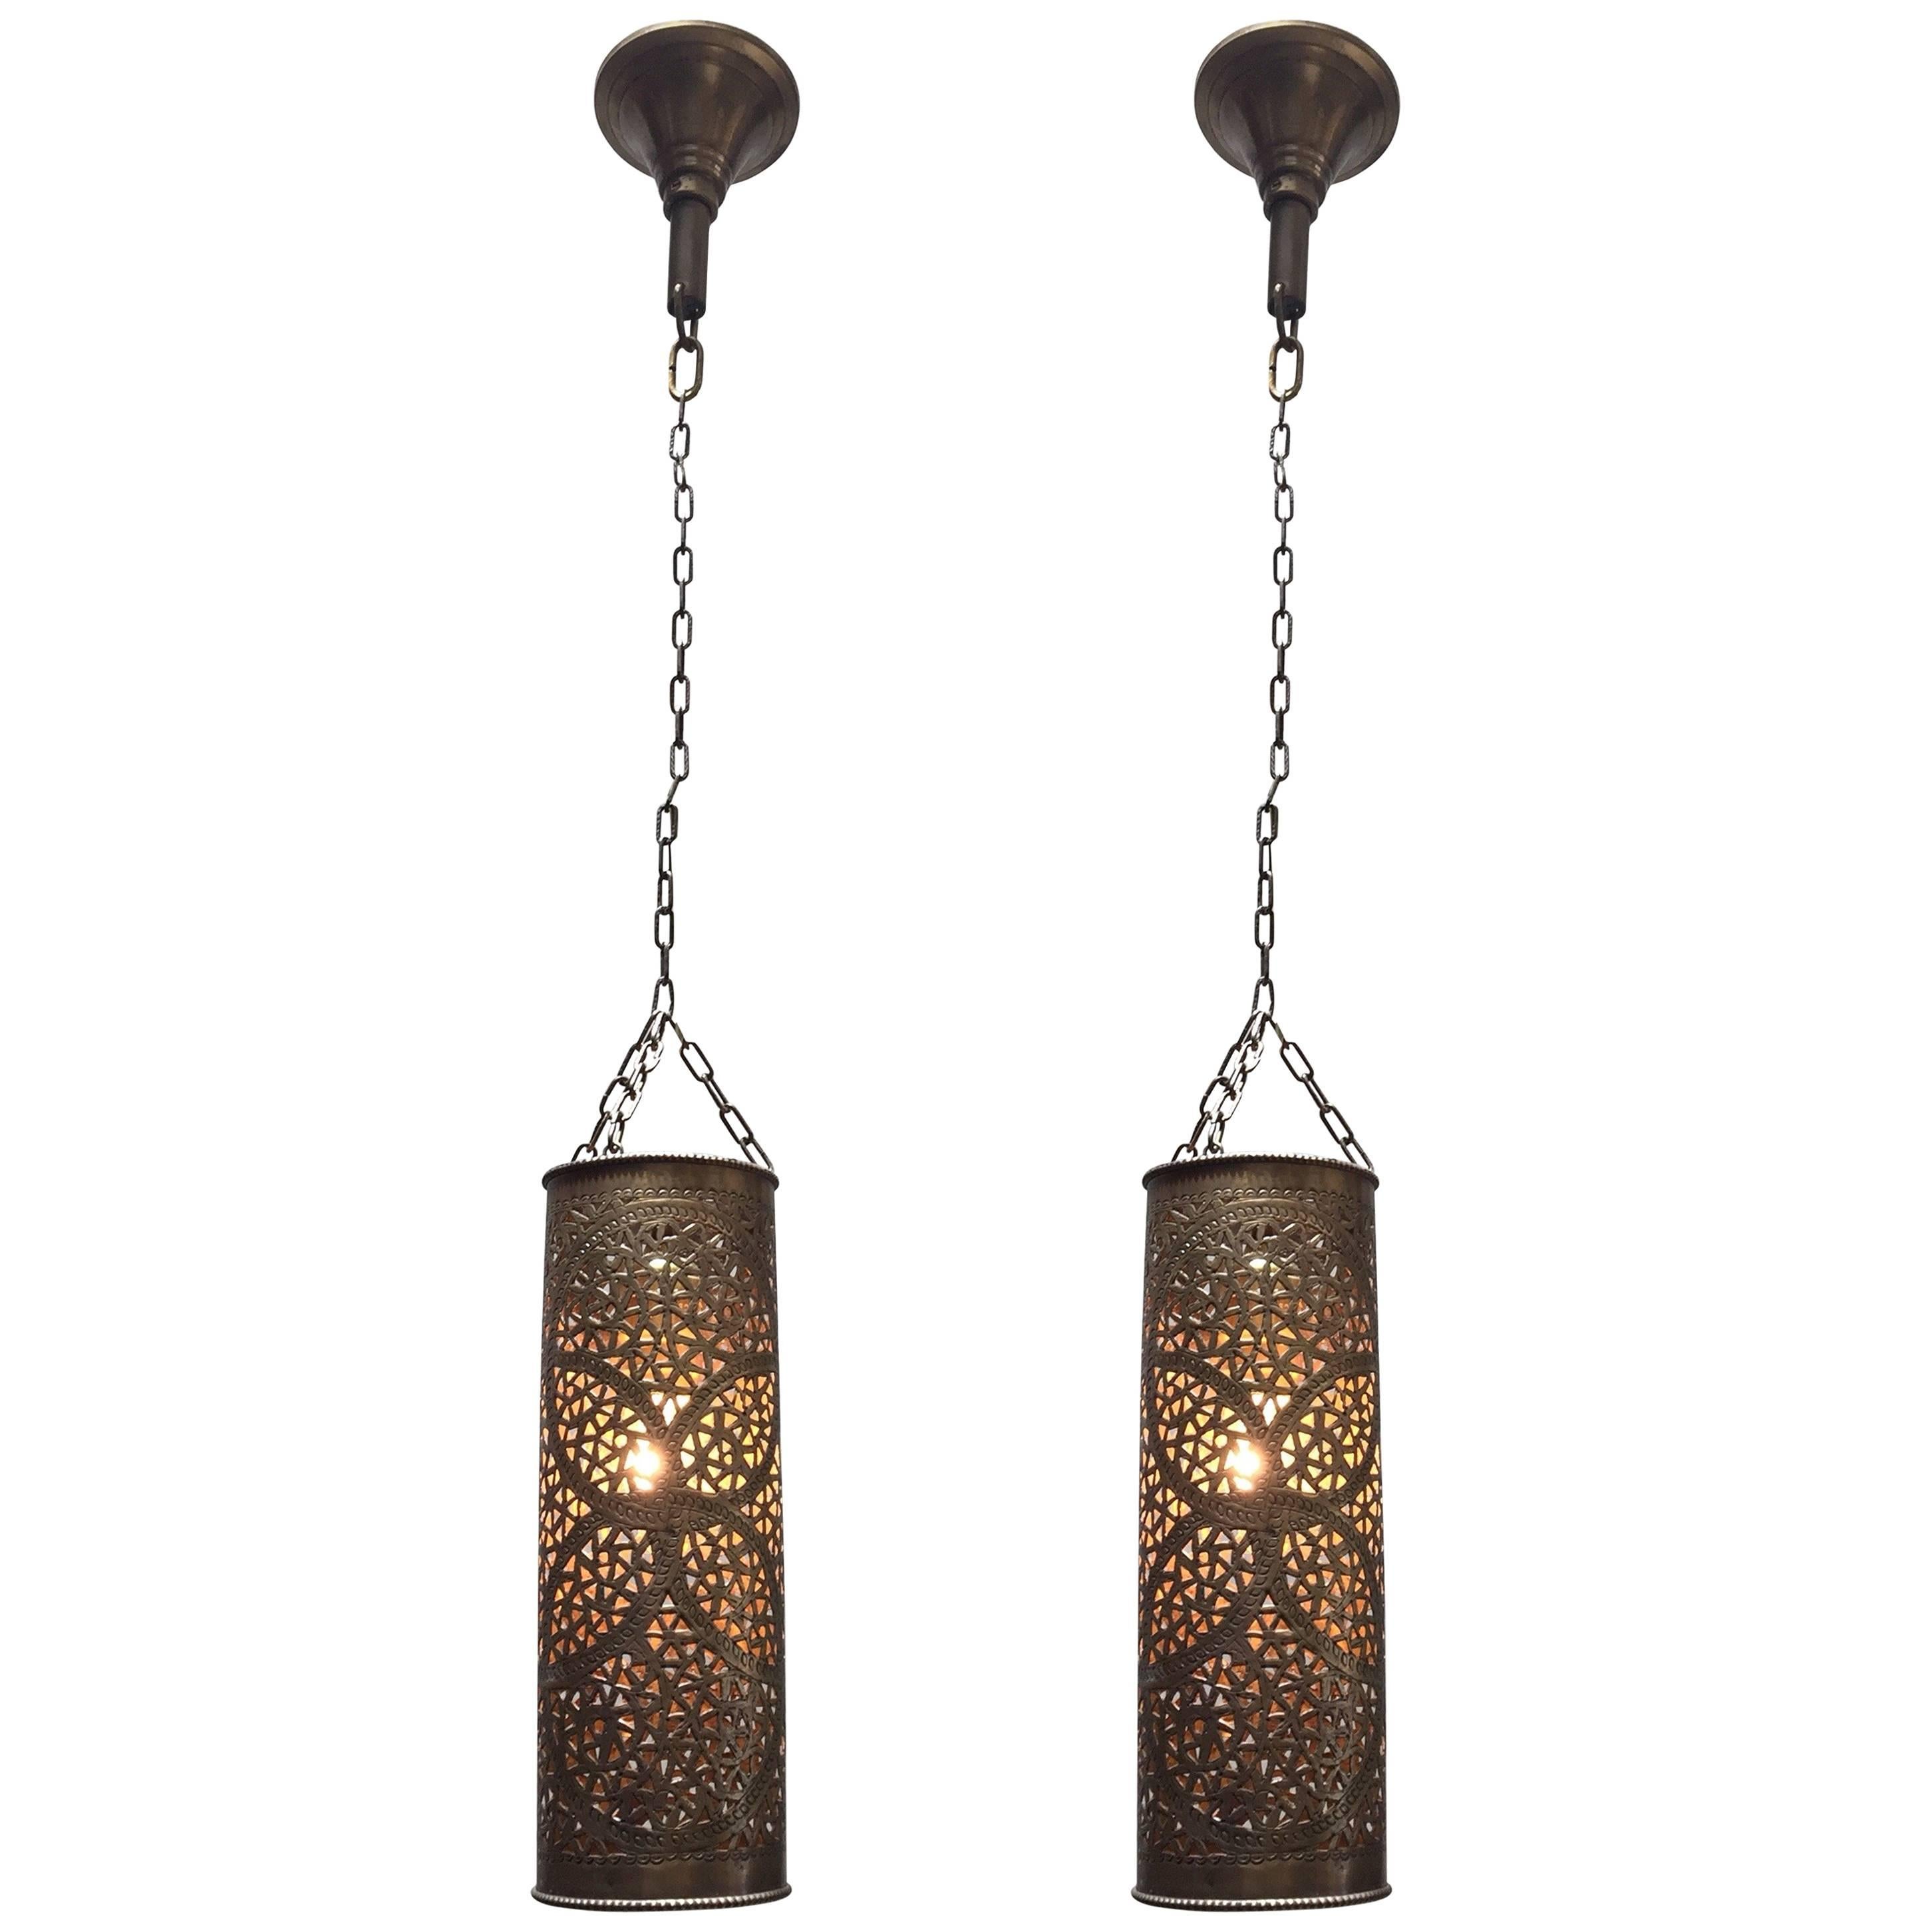 Pair of Moroccan Brass Pendants Lights with Moorish Filigree Designs